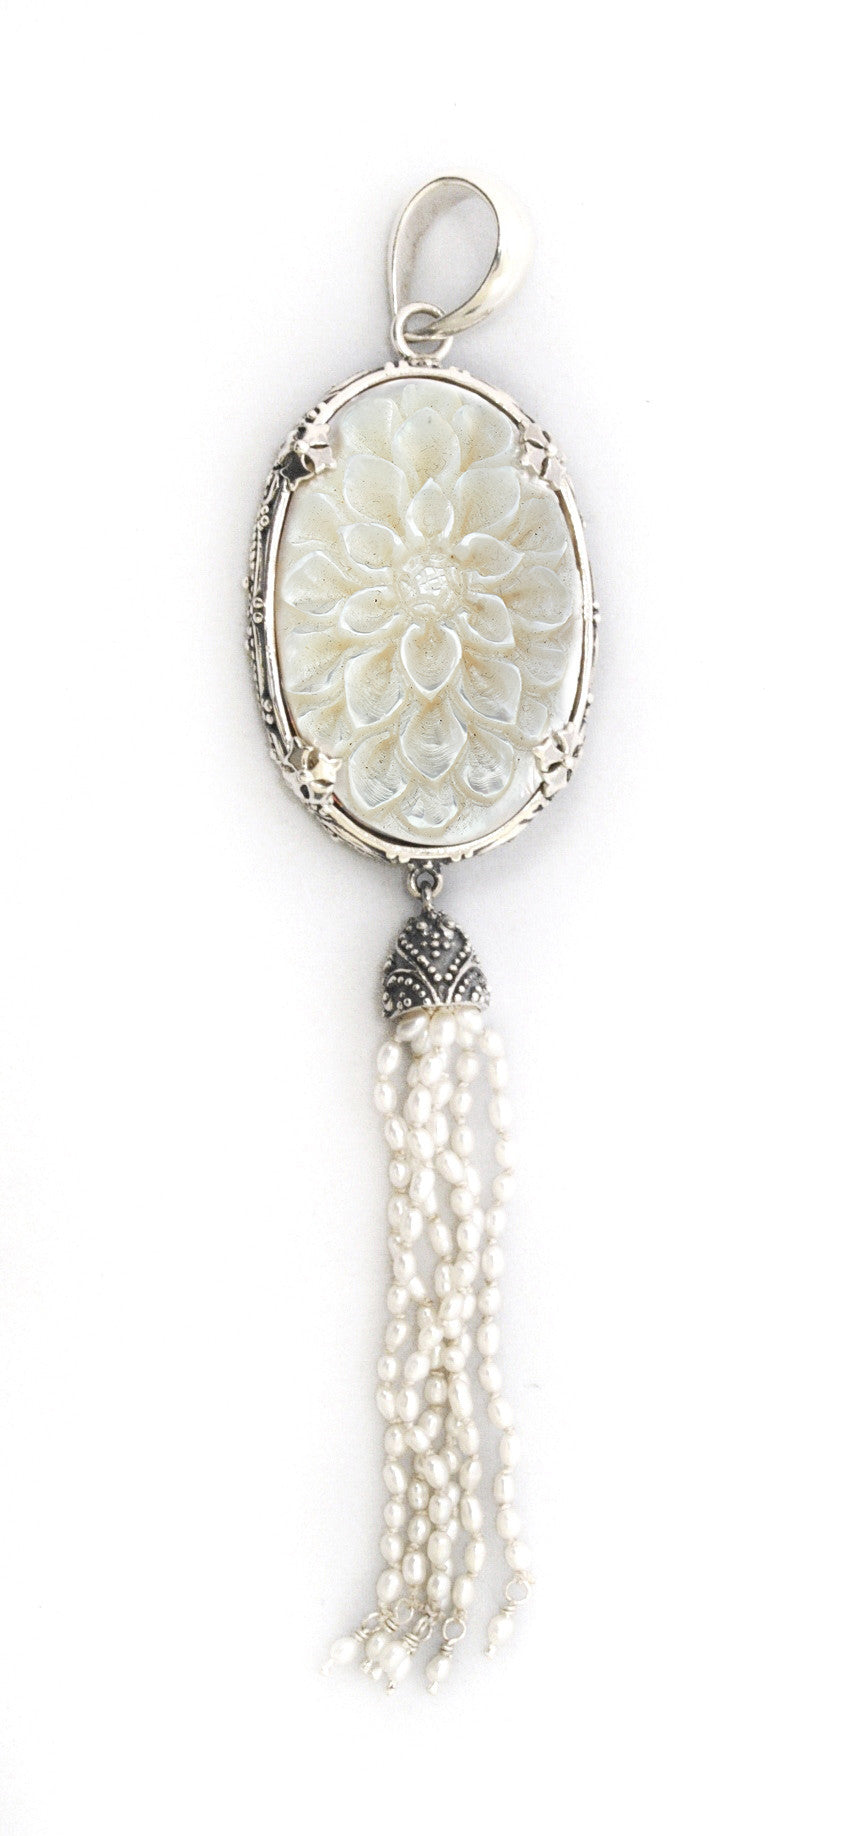 Judith Tassel Pendant - pendant - KIR Collection - designer sterling silver jewelry 